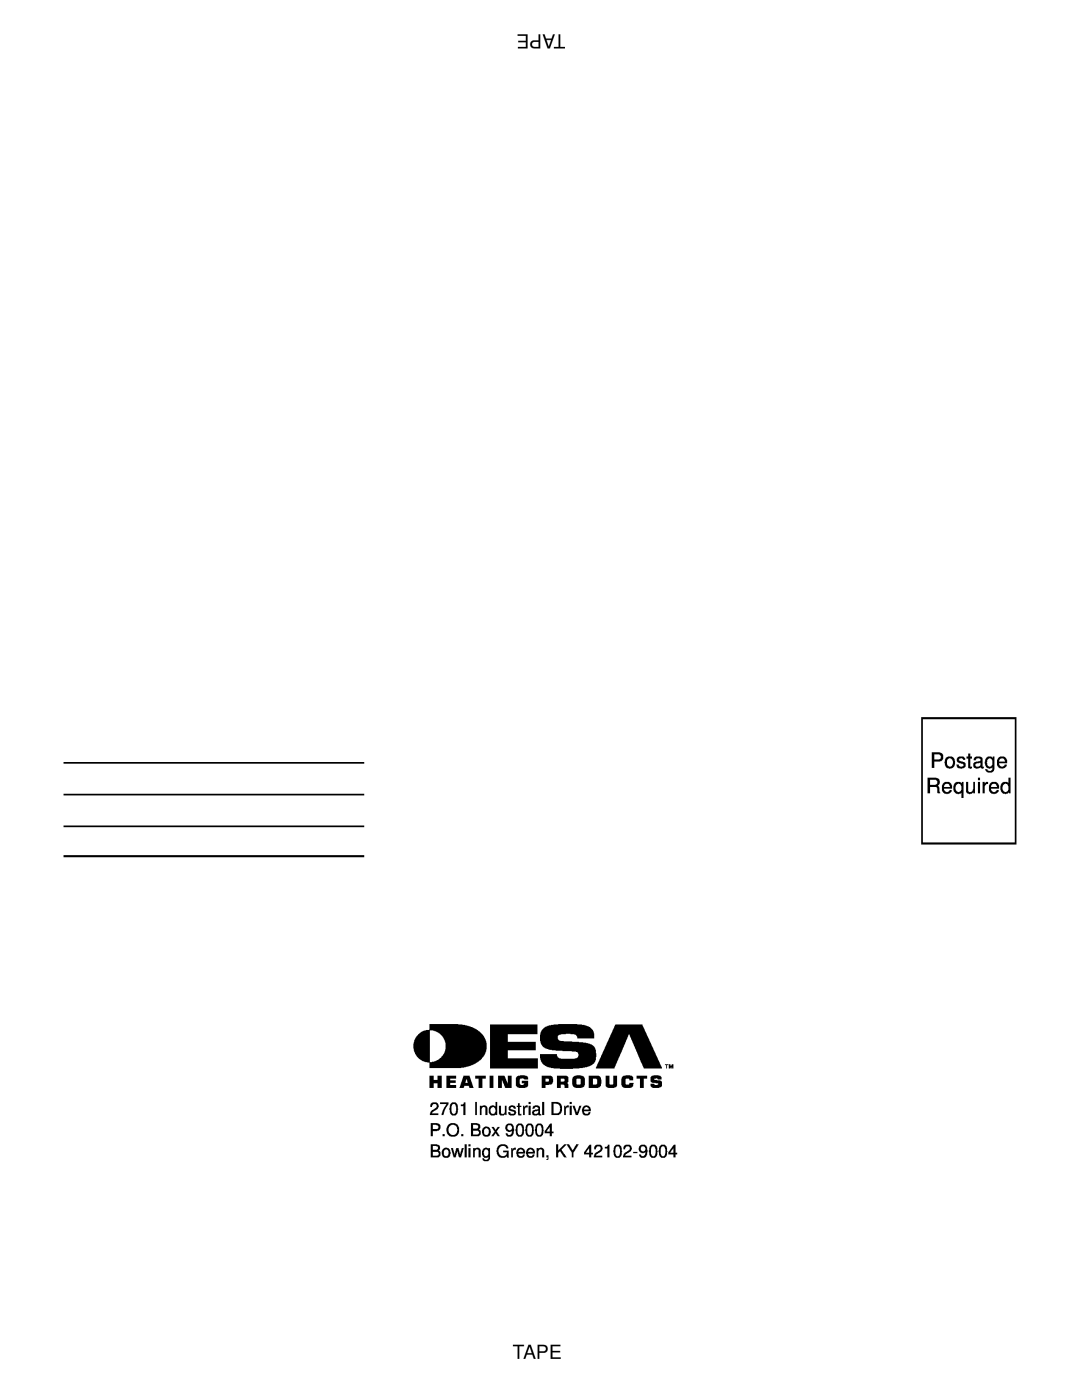 Desa CSG3930PR, CSG3930NR installation manual Postage Required, Tape 